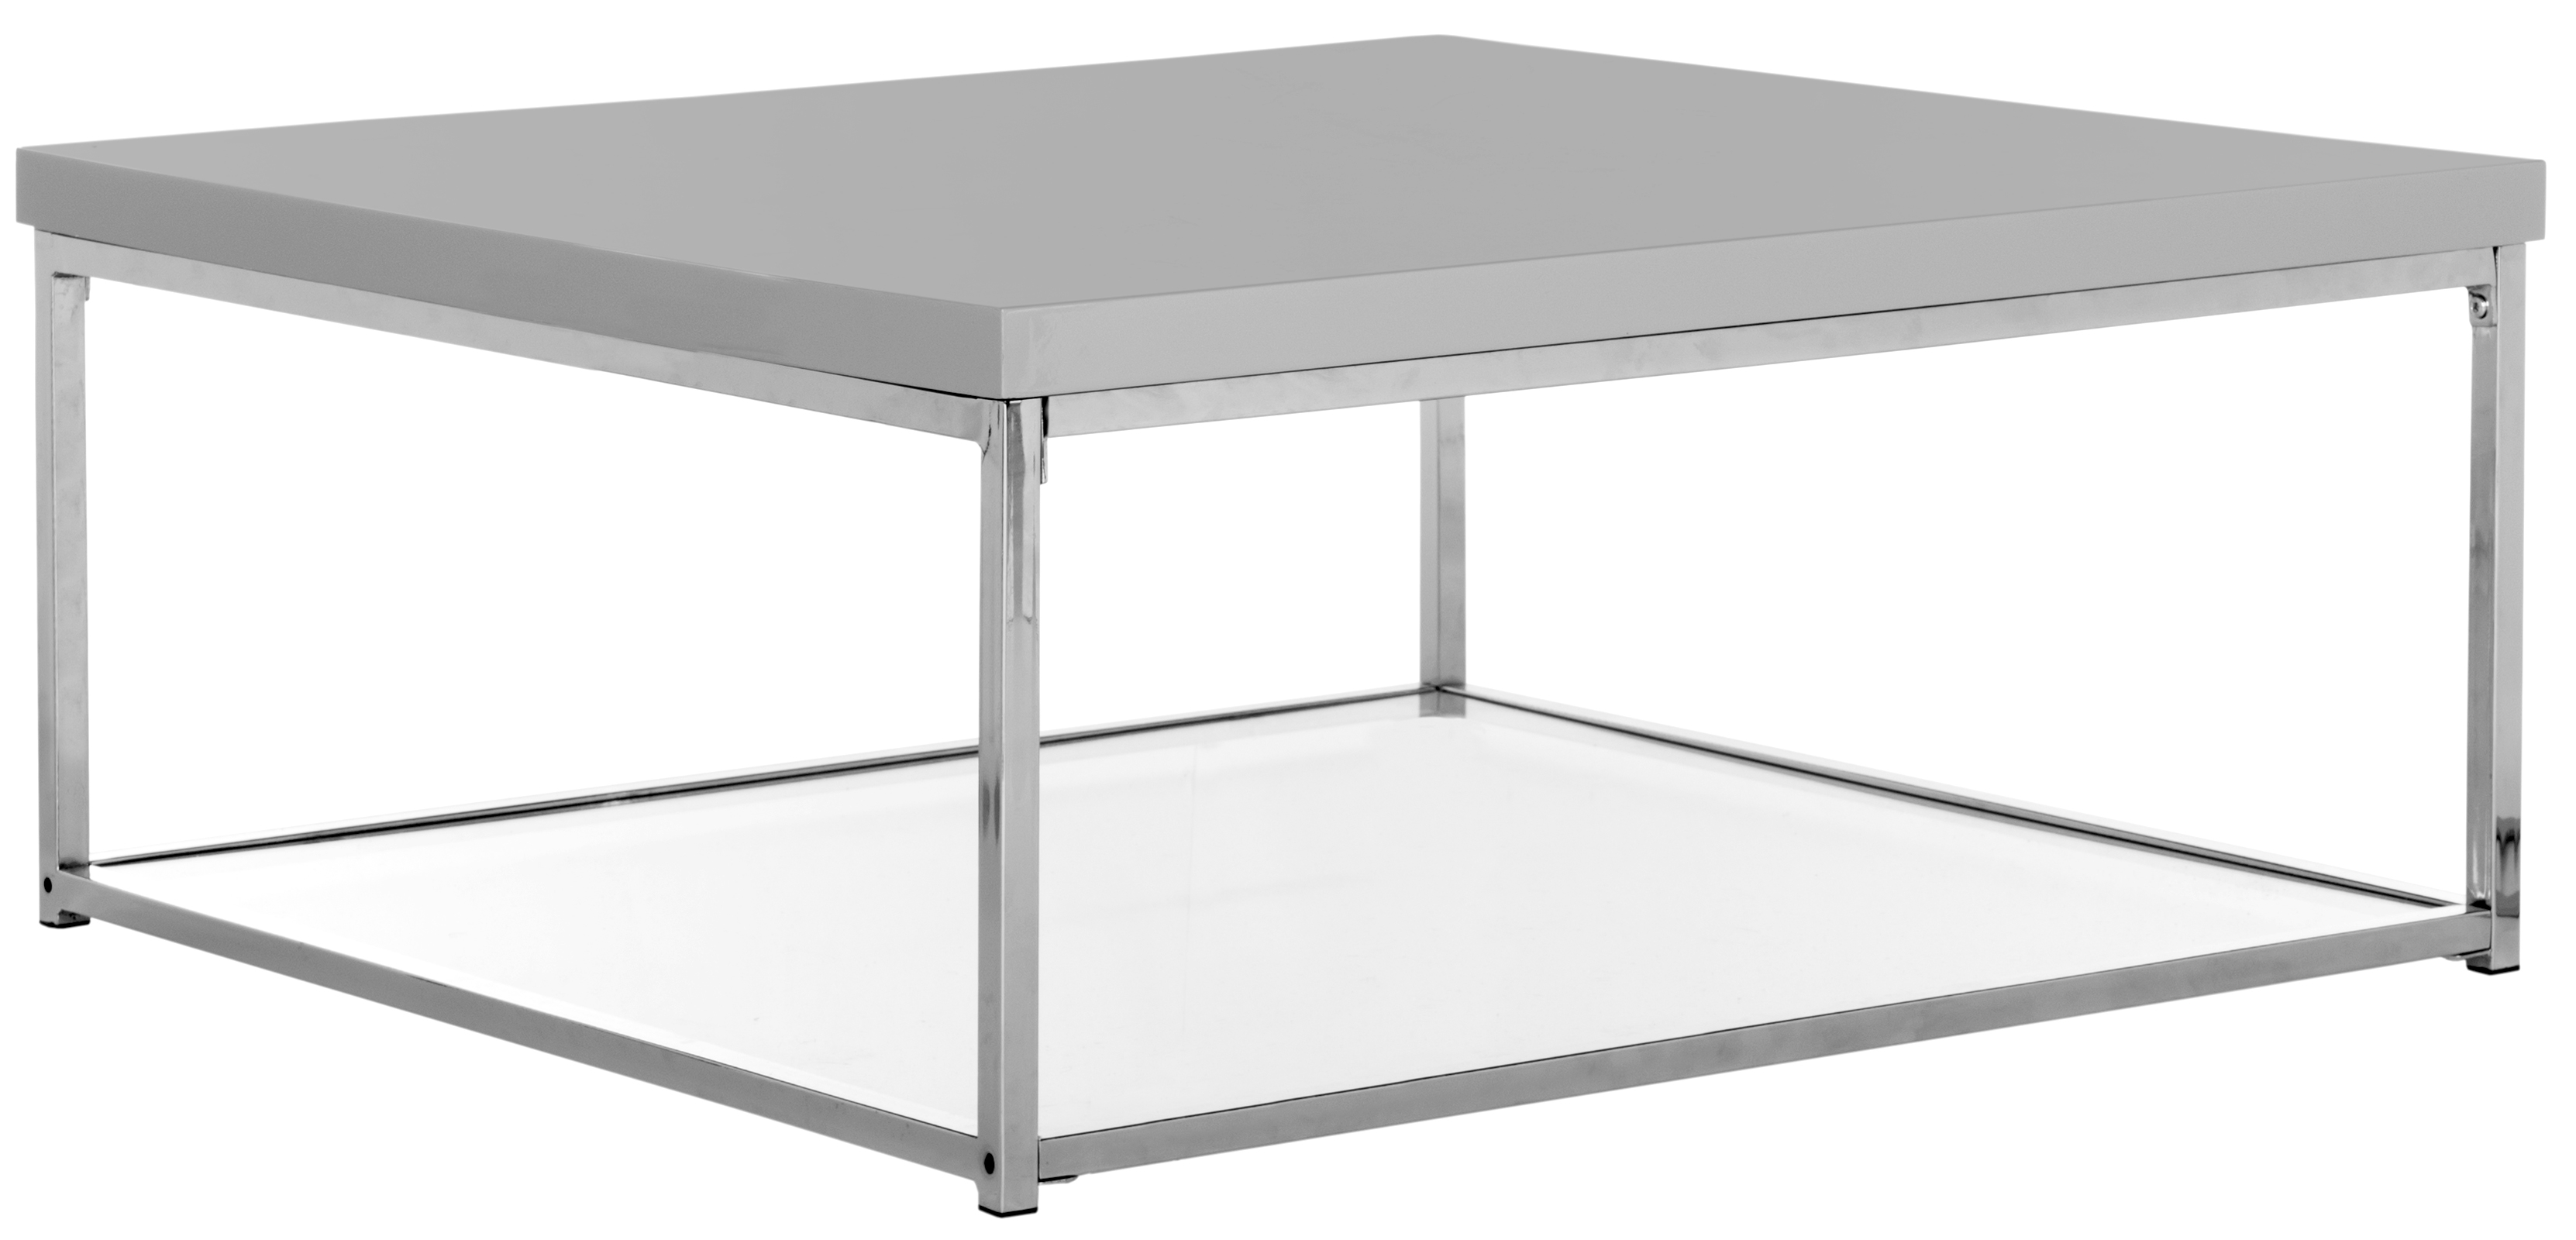 Malone High Gloss Coffee Table - Grey/Chrome - Arlo Home - Image 1